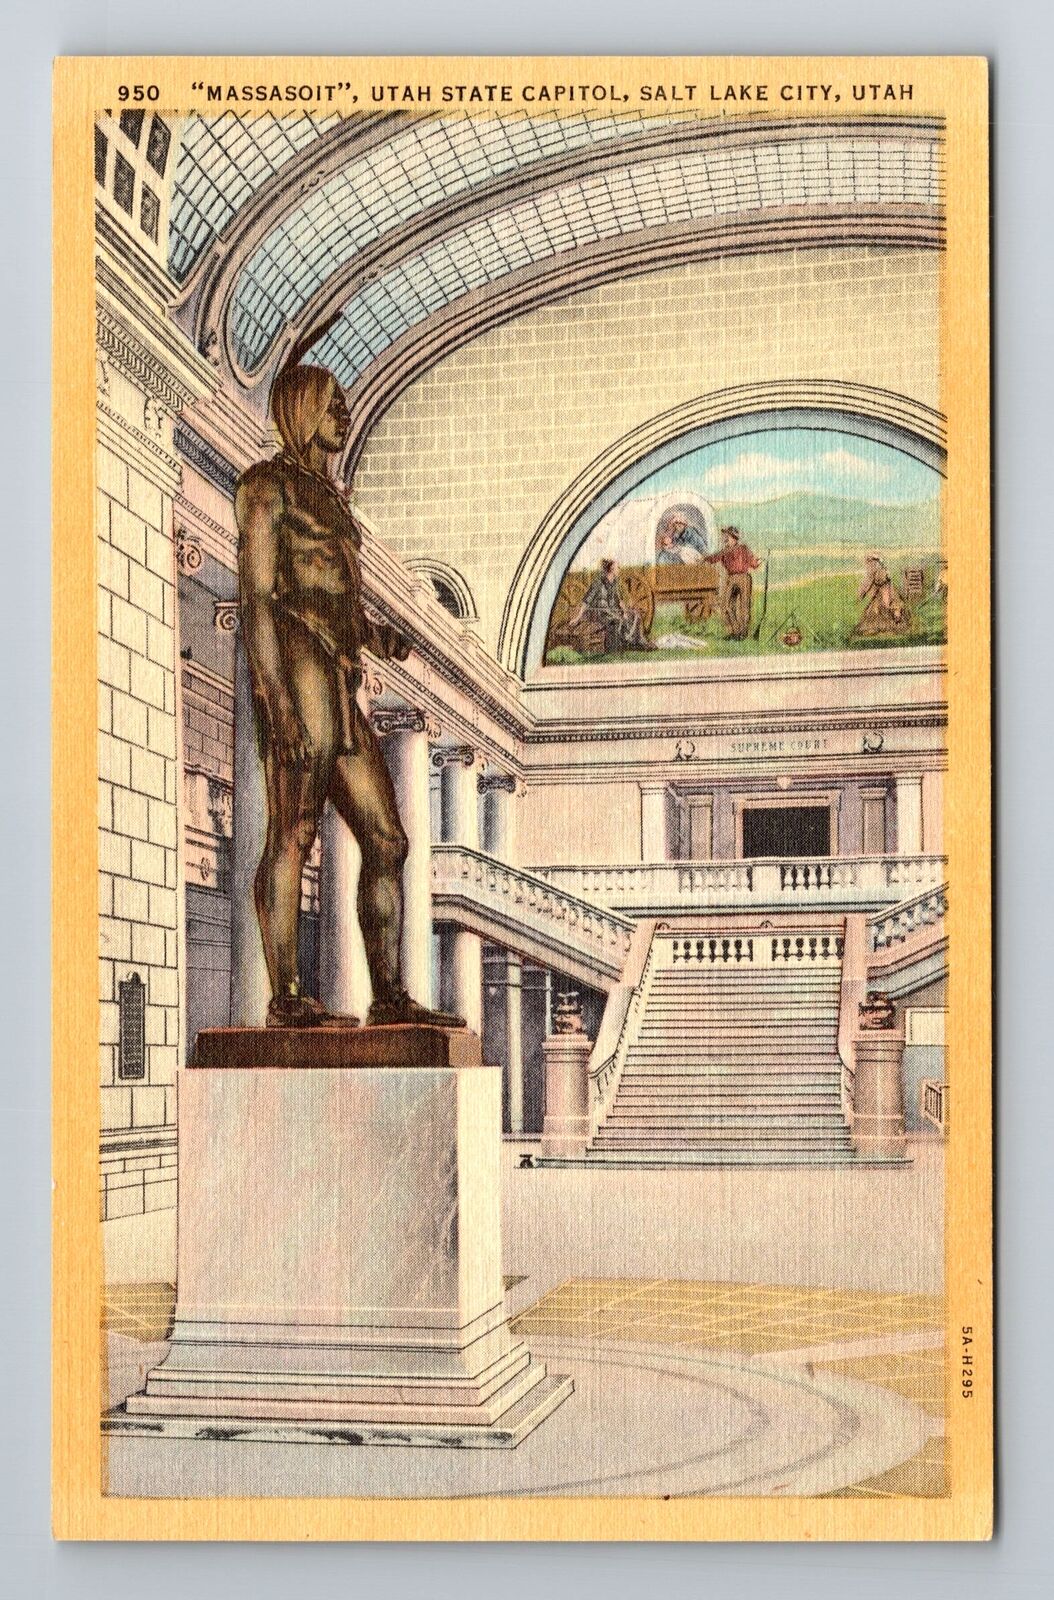 Salt Lake City UT-Utah, Utah State Capitol Statue of Massasoit, Vintage Postcard